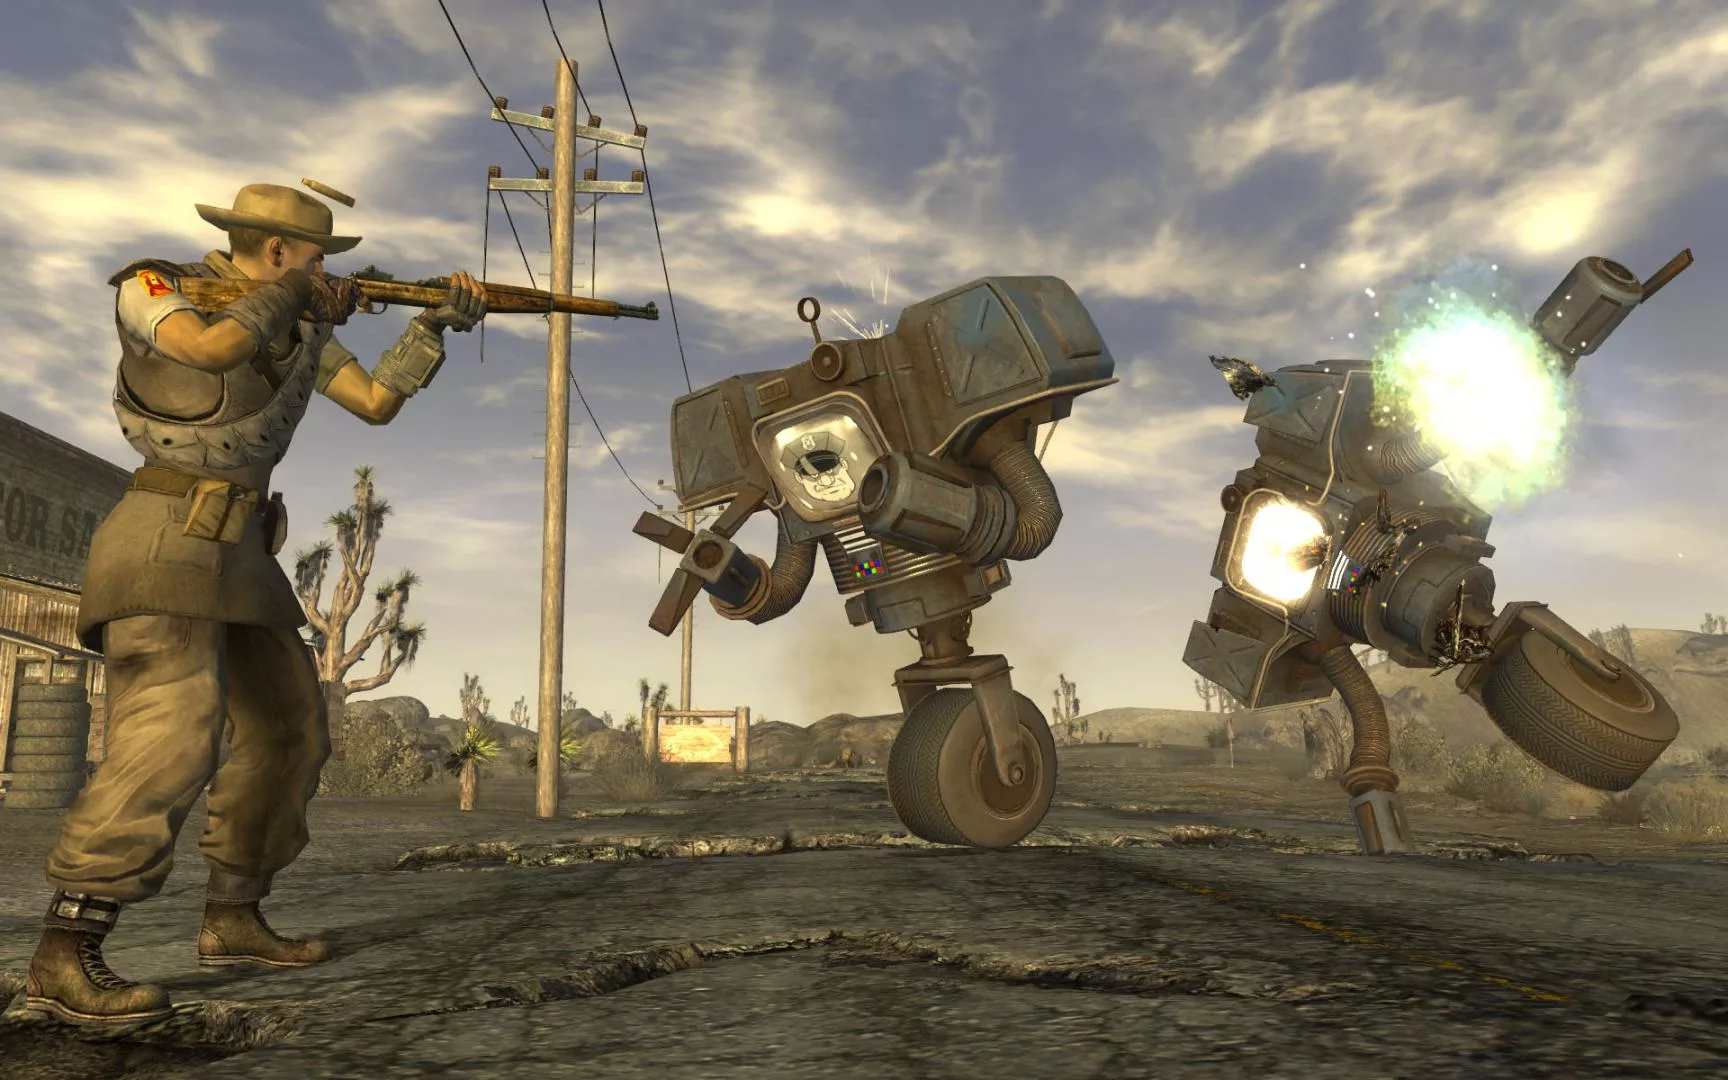 Fallout New Vegas Torrent